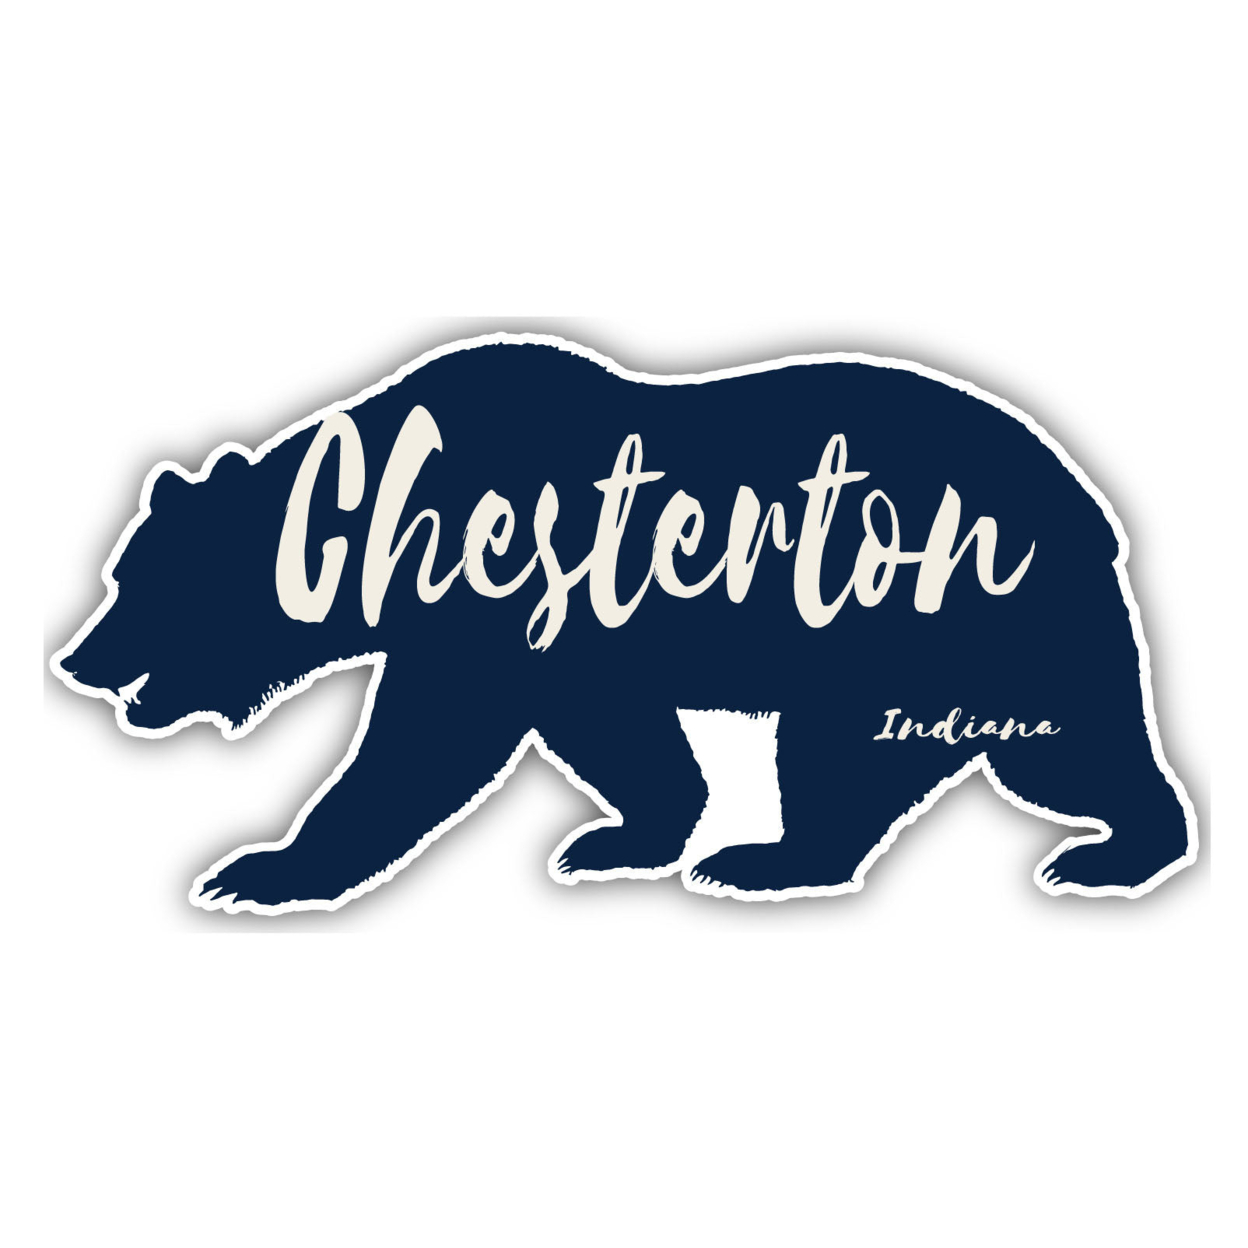 Chesterton Indiana Souvenir Decorative Stickers (Choose Theme And Size) - Single Unit, 8-Inch, Tent